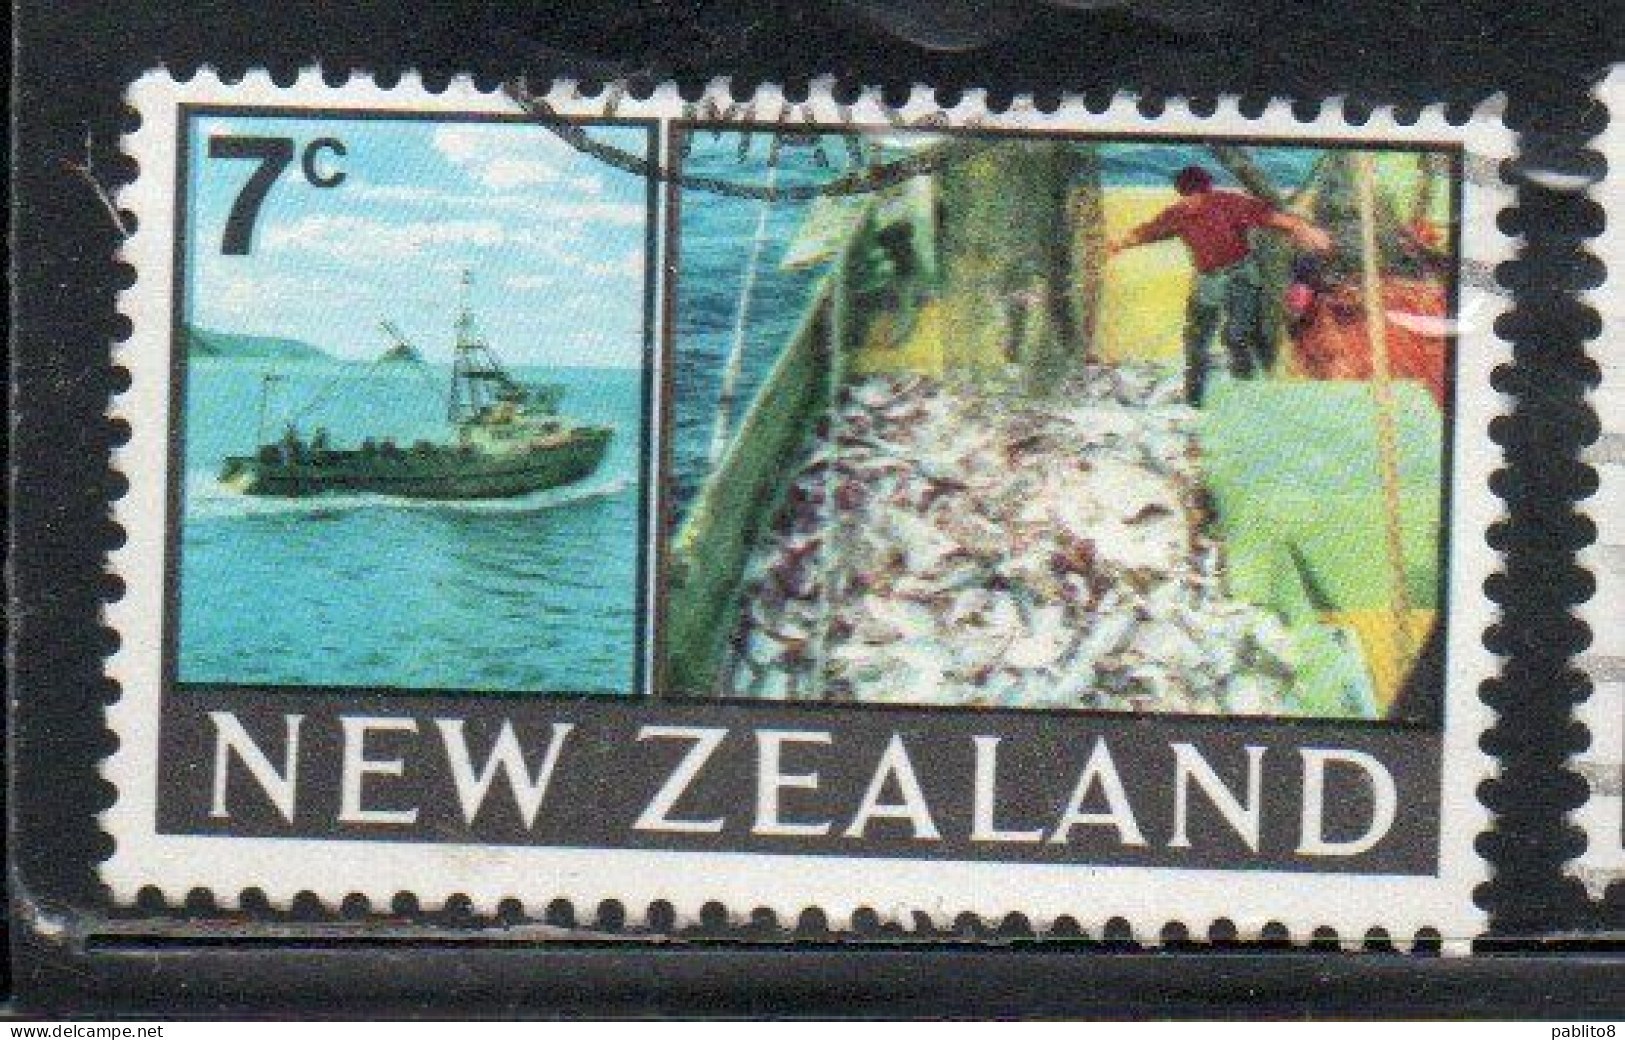 NEW ZEALAND NUOVA ZELANDA 1968 1969 TRAWLER AND CATCH 7c USED USATO OBLITERE' - Usati